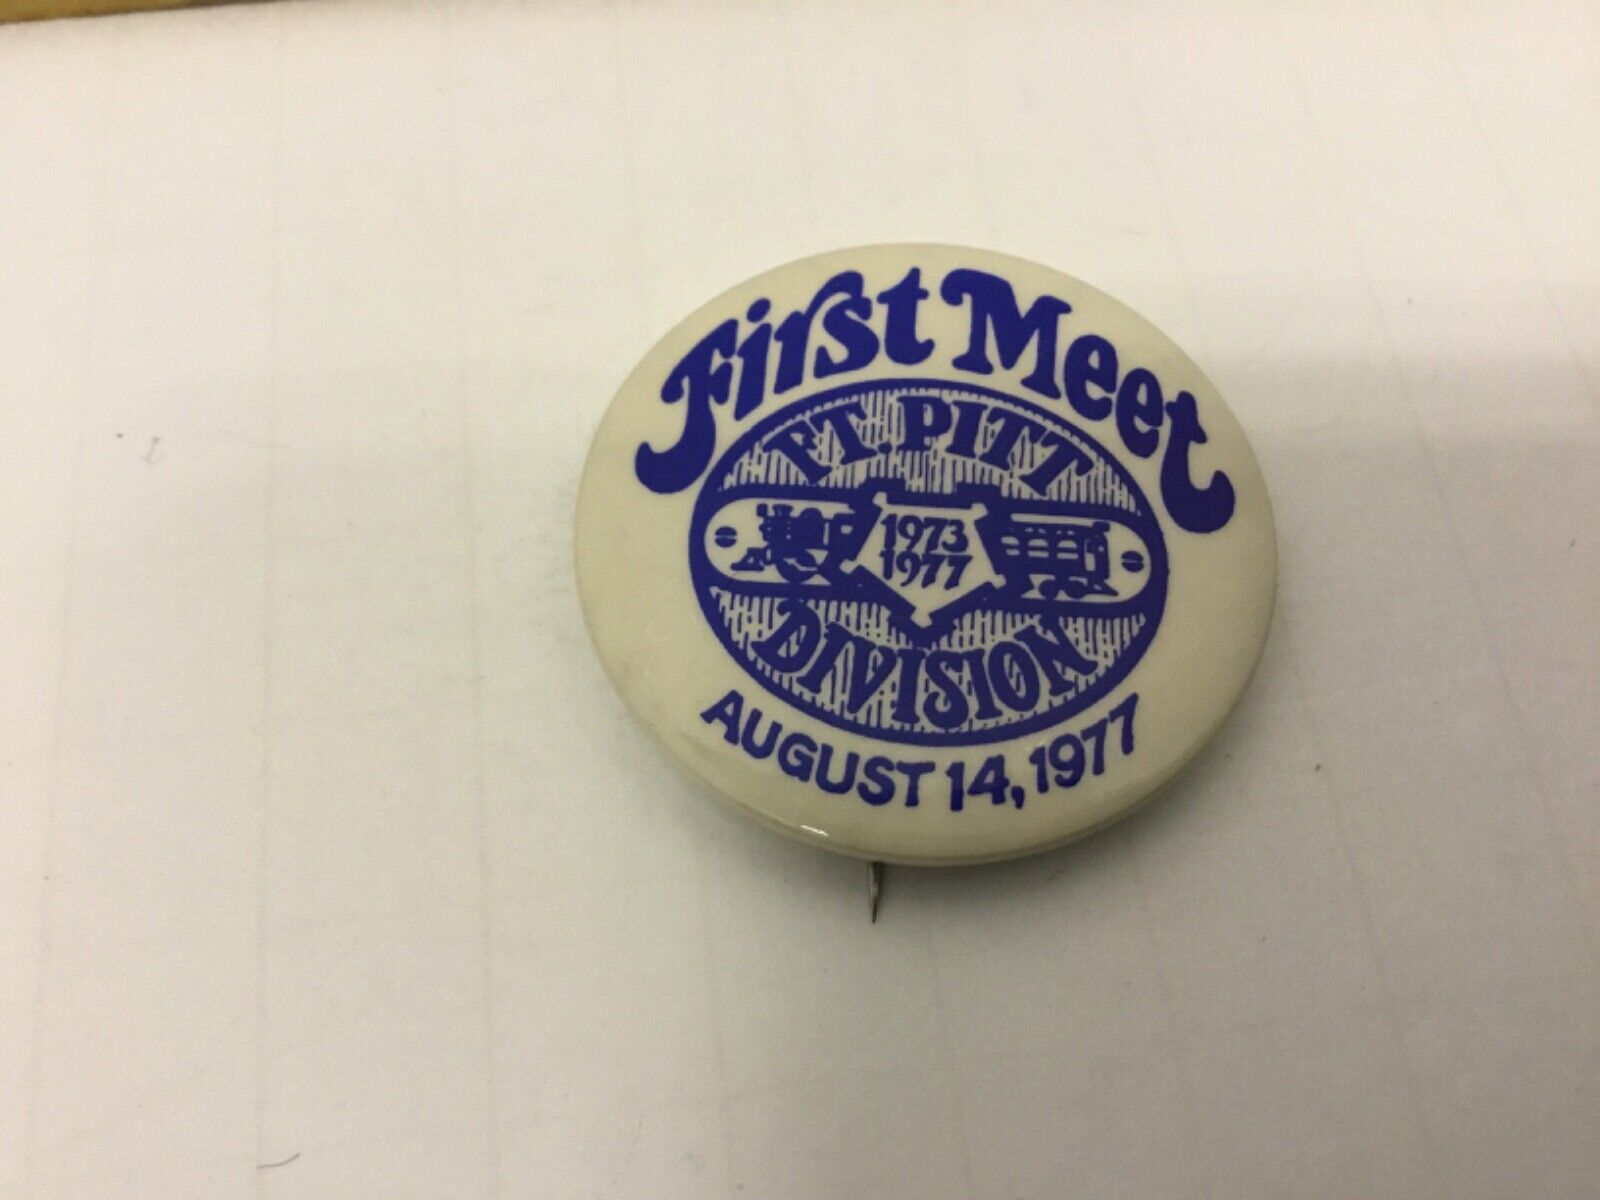 Vintage 1973/1977 Pittsburgh First Meet Ft. Pitt Div. Pin Back August 14, 1977